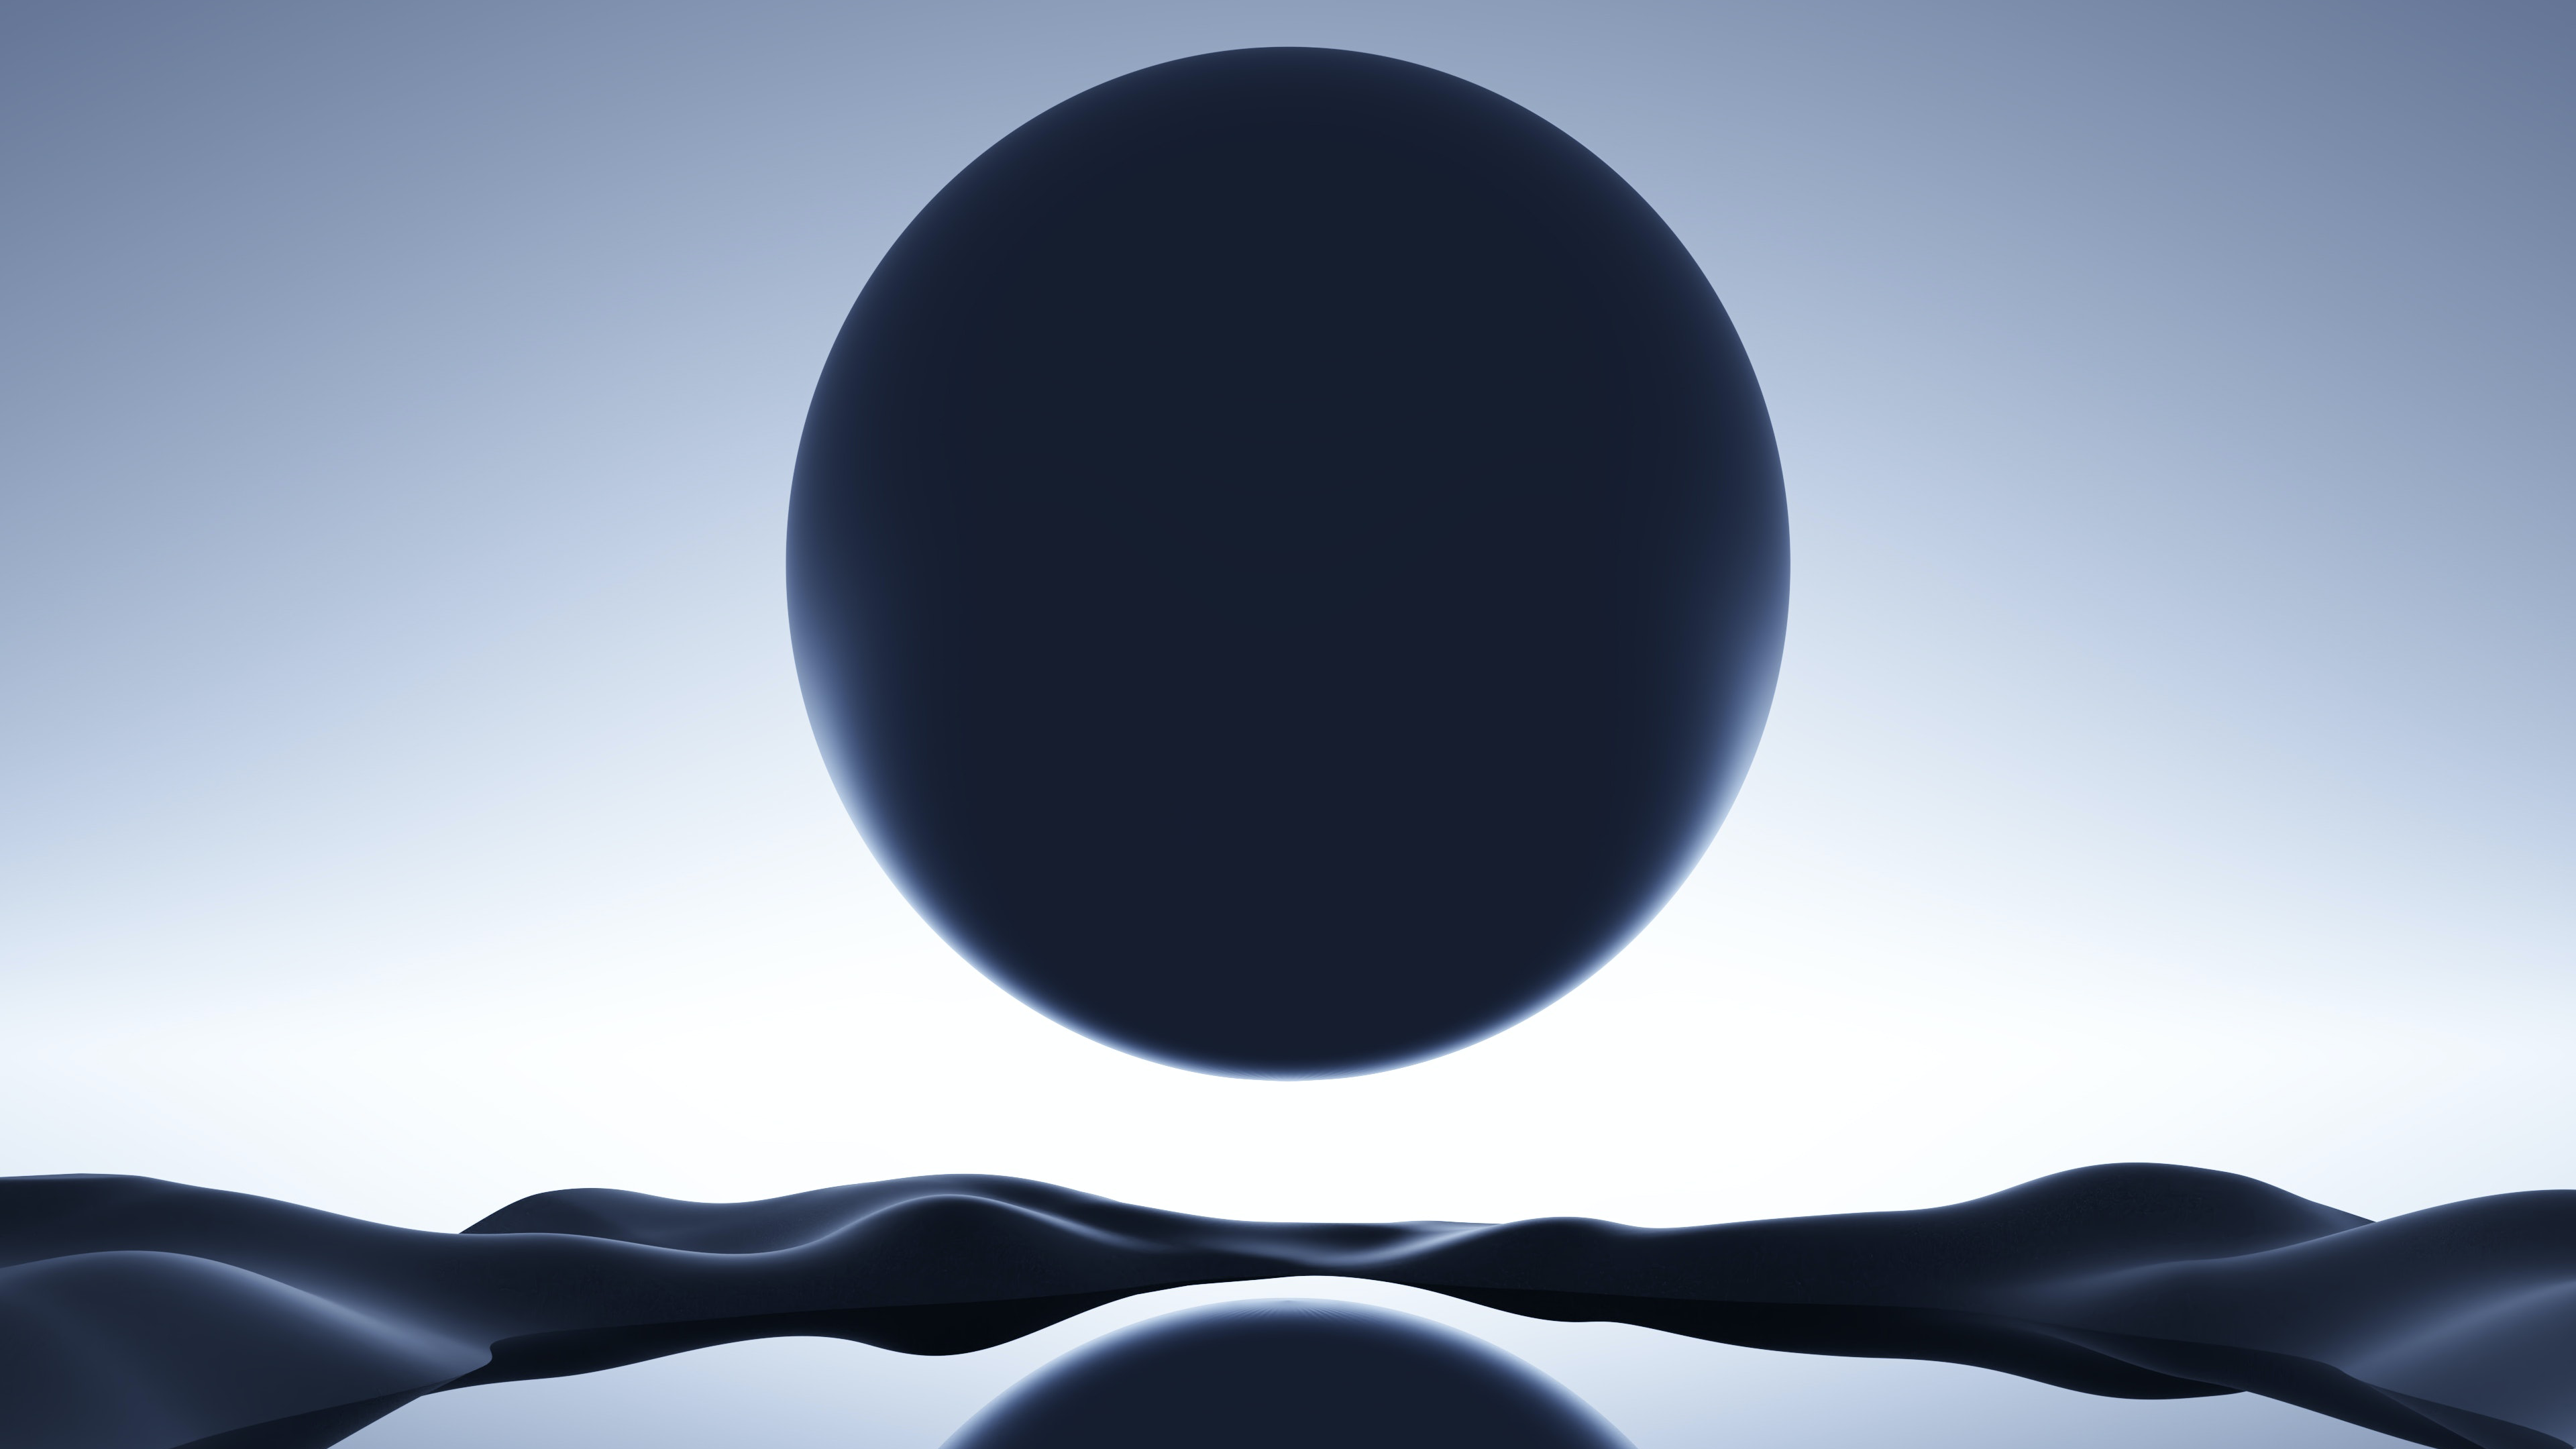 Digital Art Artwork Illustration Ball 3D Abstract Lake Dunes Minimalism Reflection 3840x2160